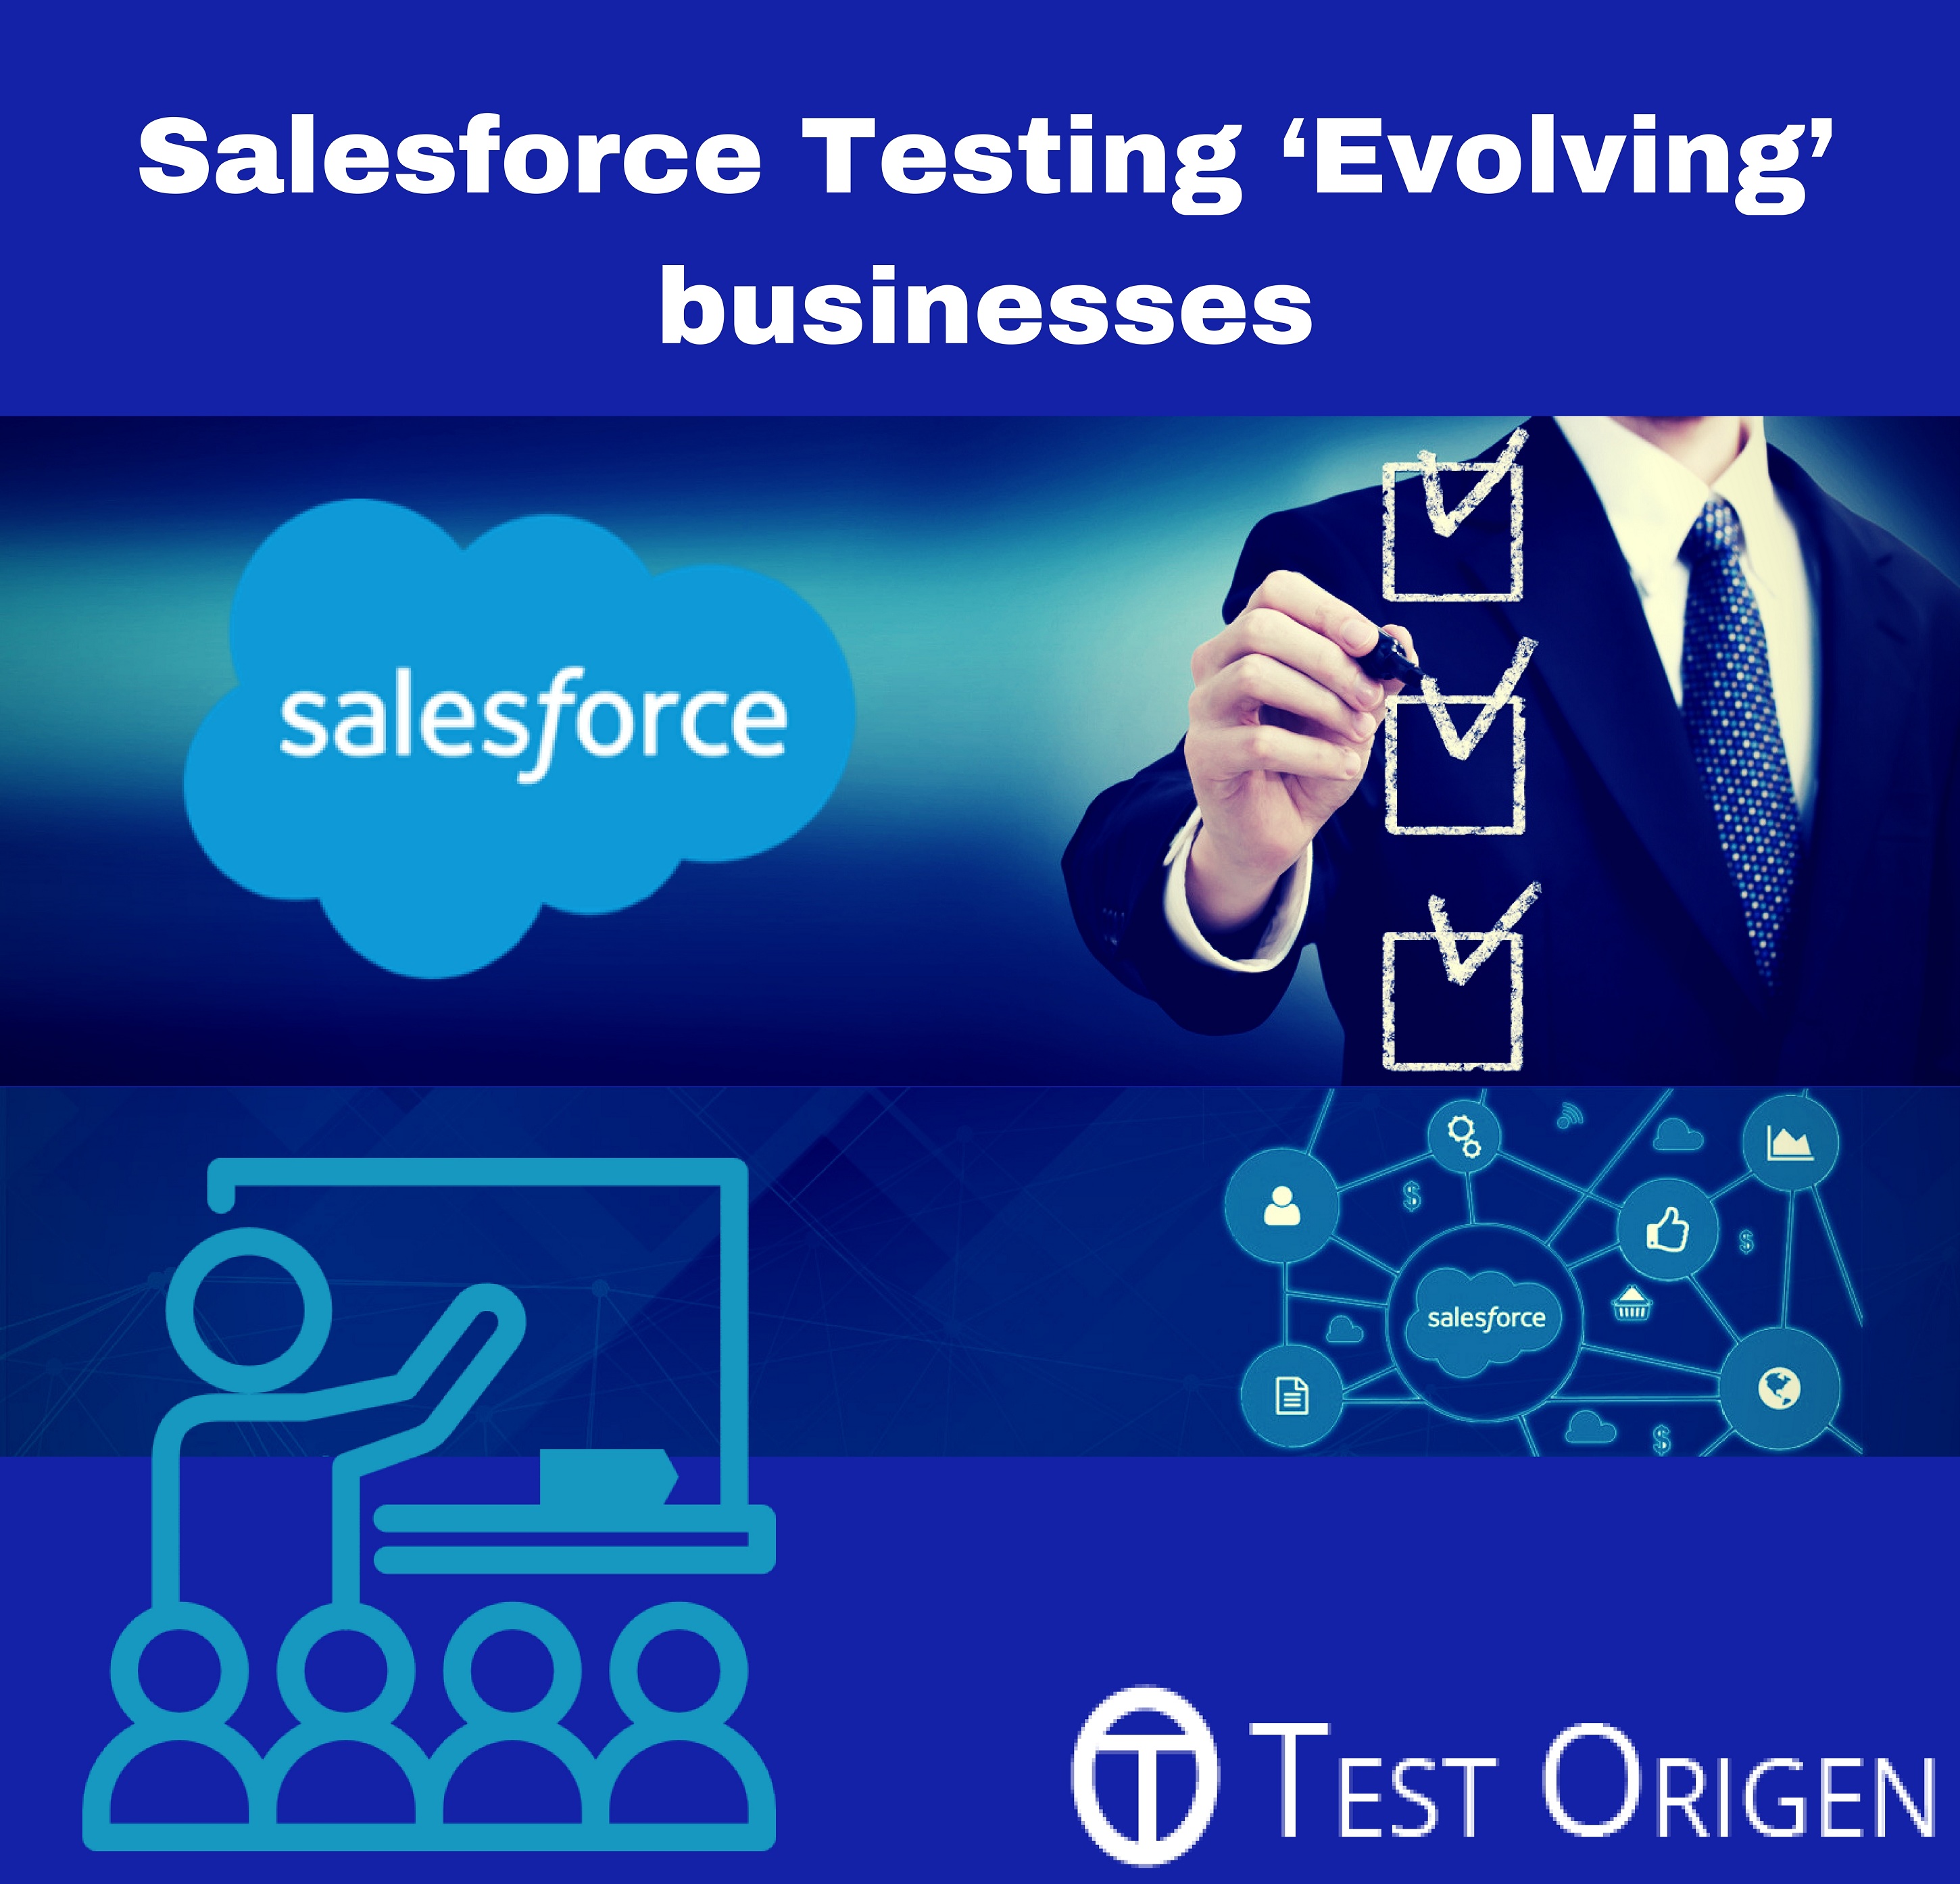 Salesforce Testing ‘Evolving’ businesses